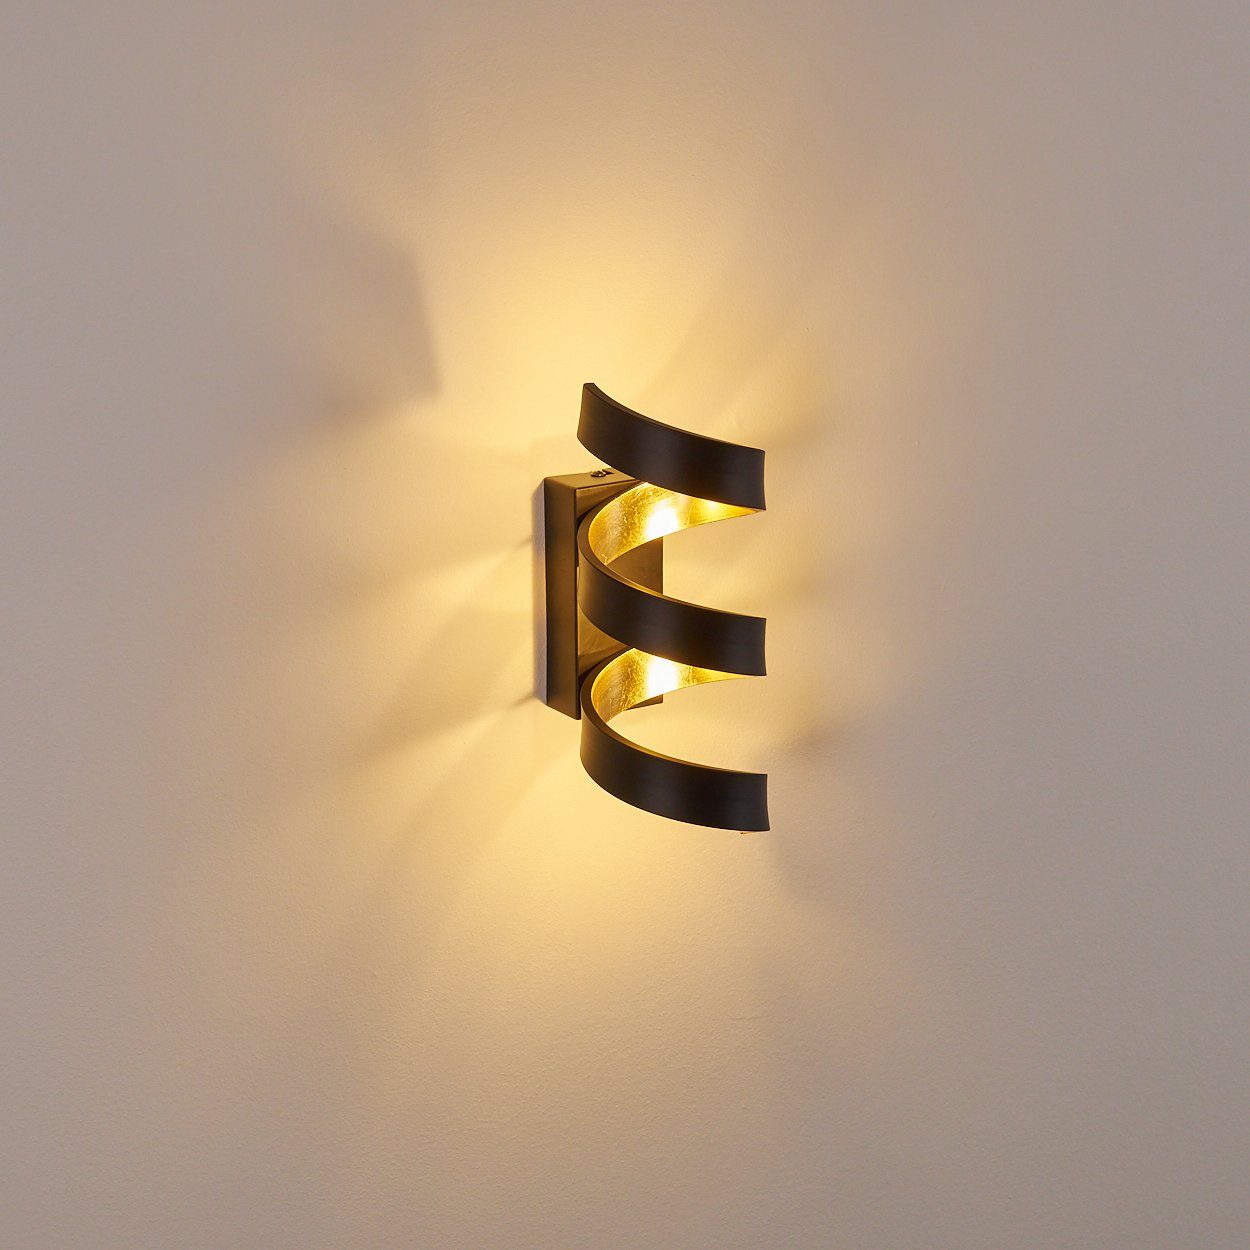 der 3x3 3000 Watt, Wandlampe Lumen, LED Wand Metall hofstein Lichteffekt 450 in an Kelvin, aus Wandleuchte Innen. »Delia« Schwarz/Gold,